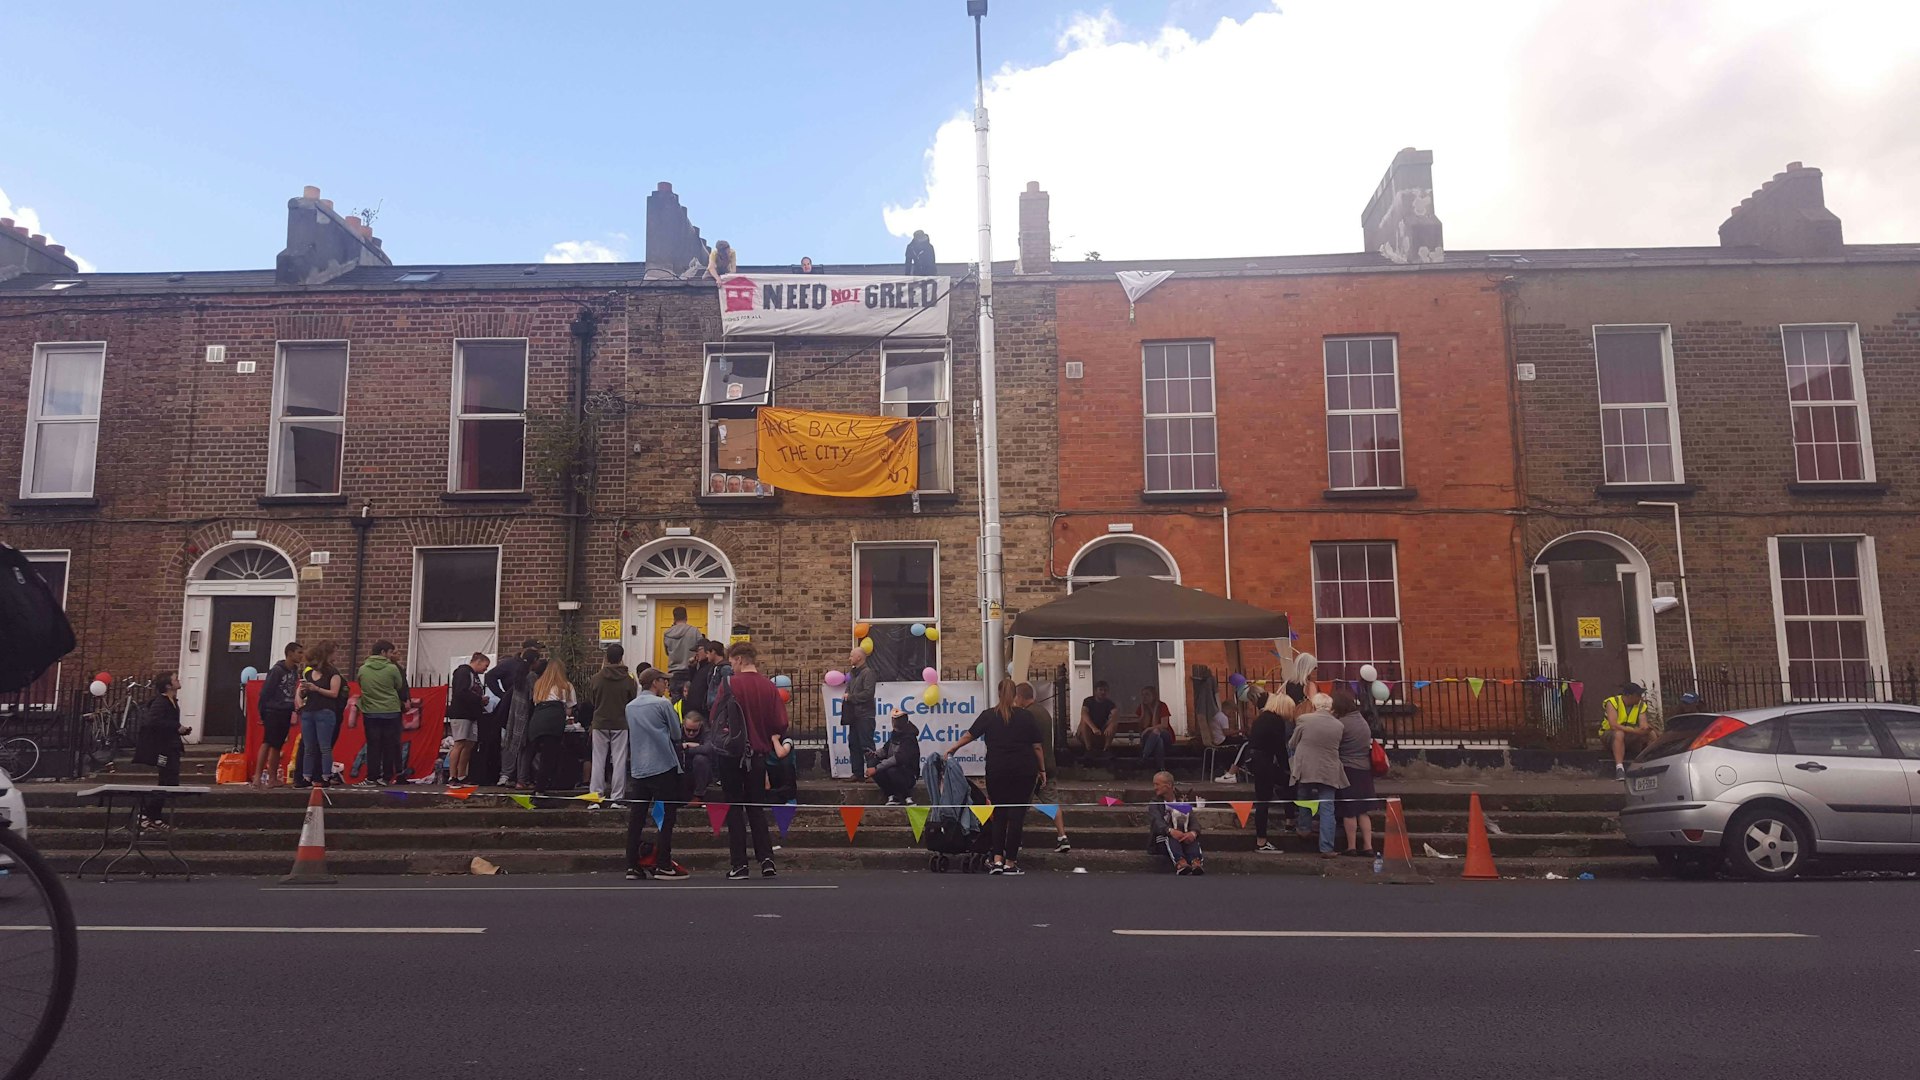 Dublin activists are rebelling against slum landlords